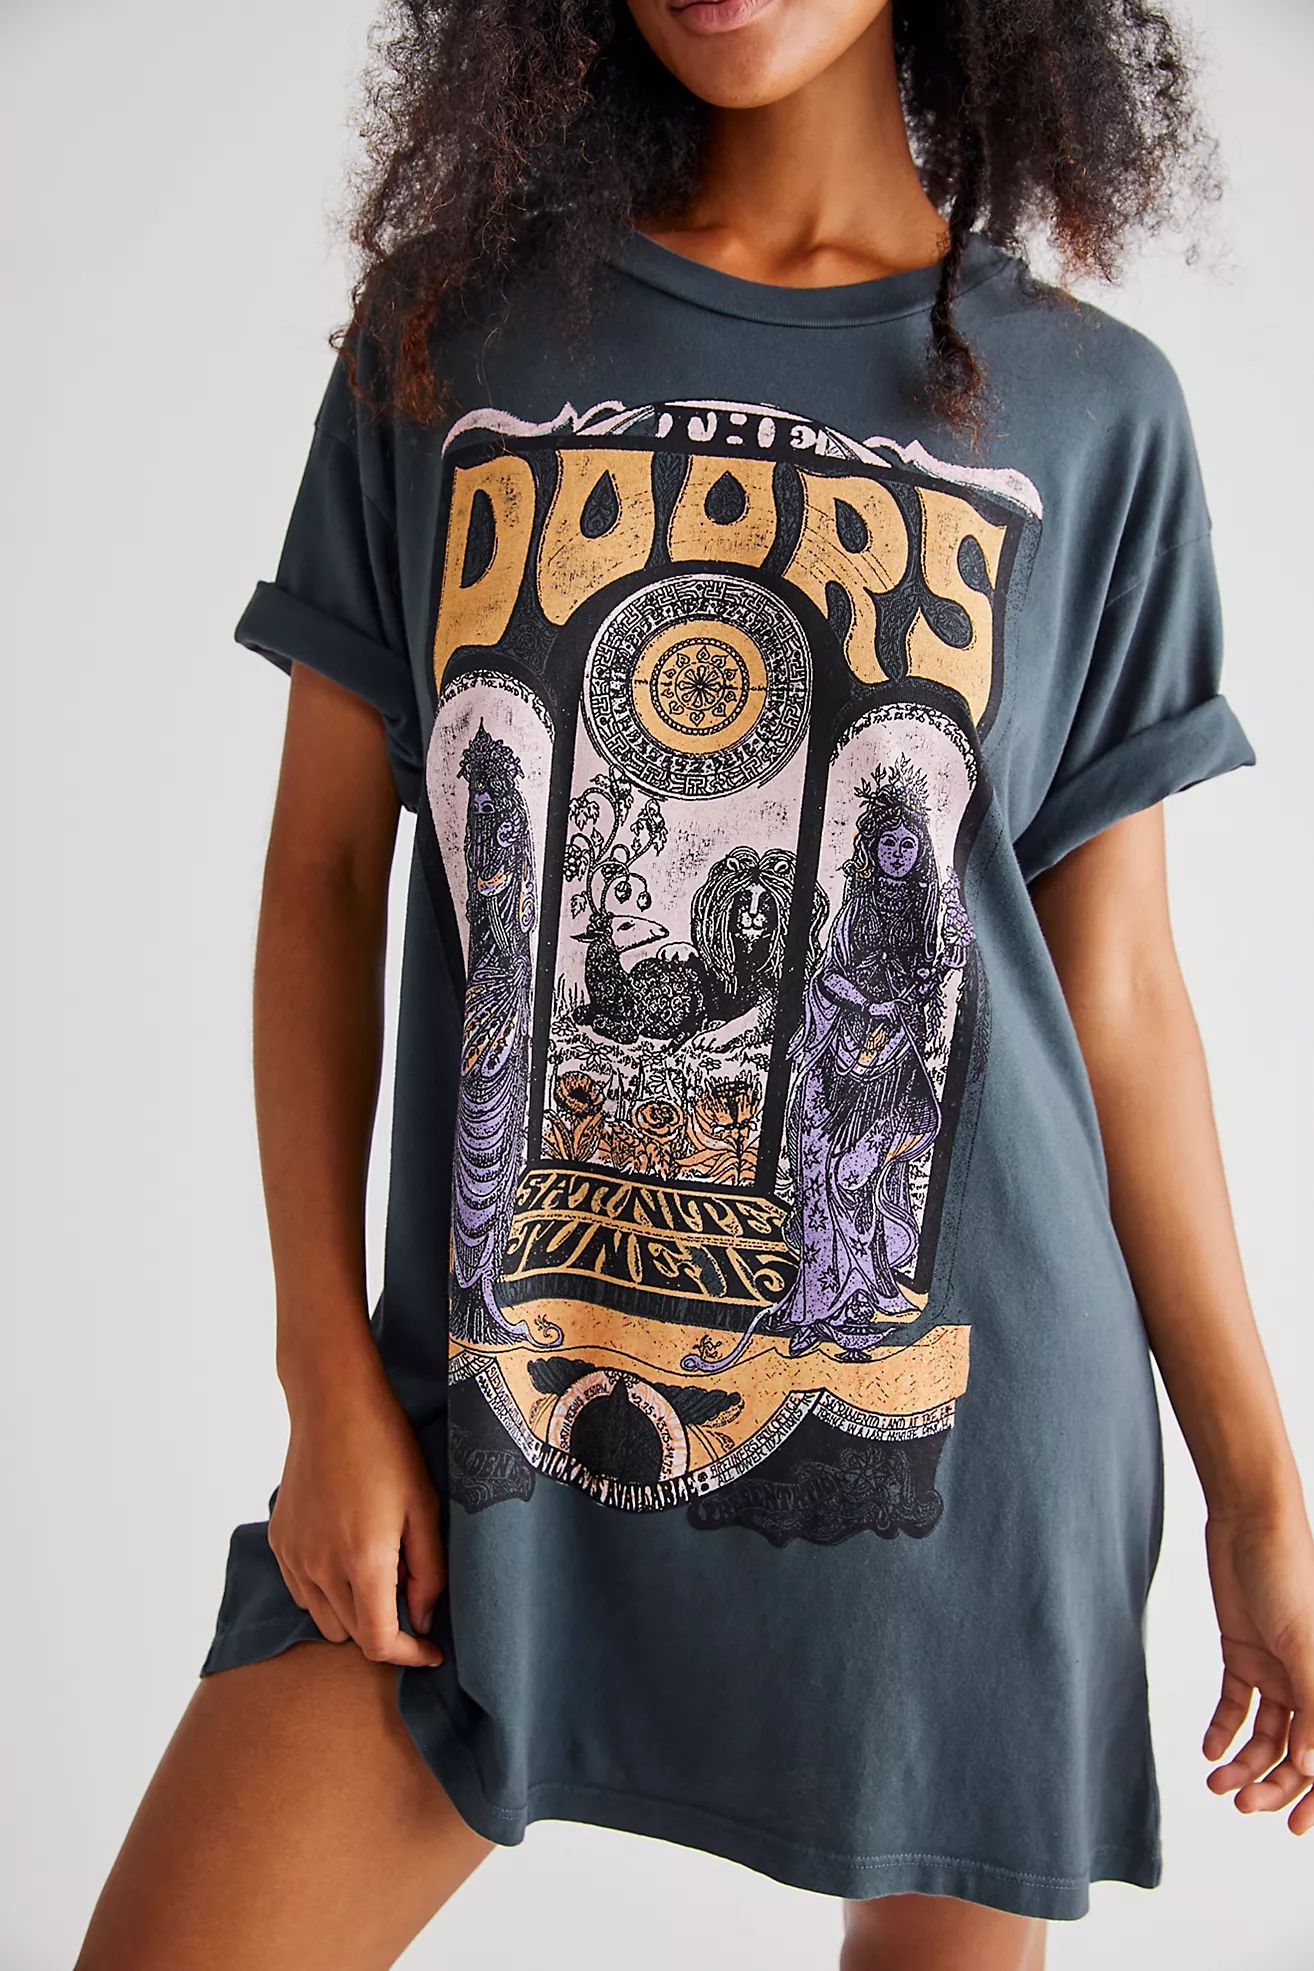 The Doors Tee Shirt Dress | Free People (UK)